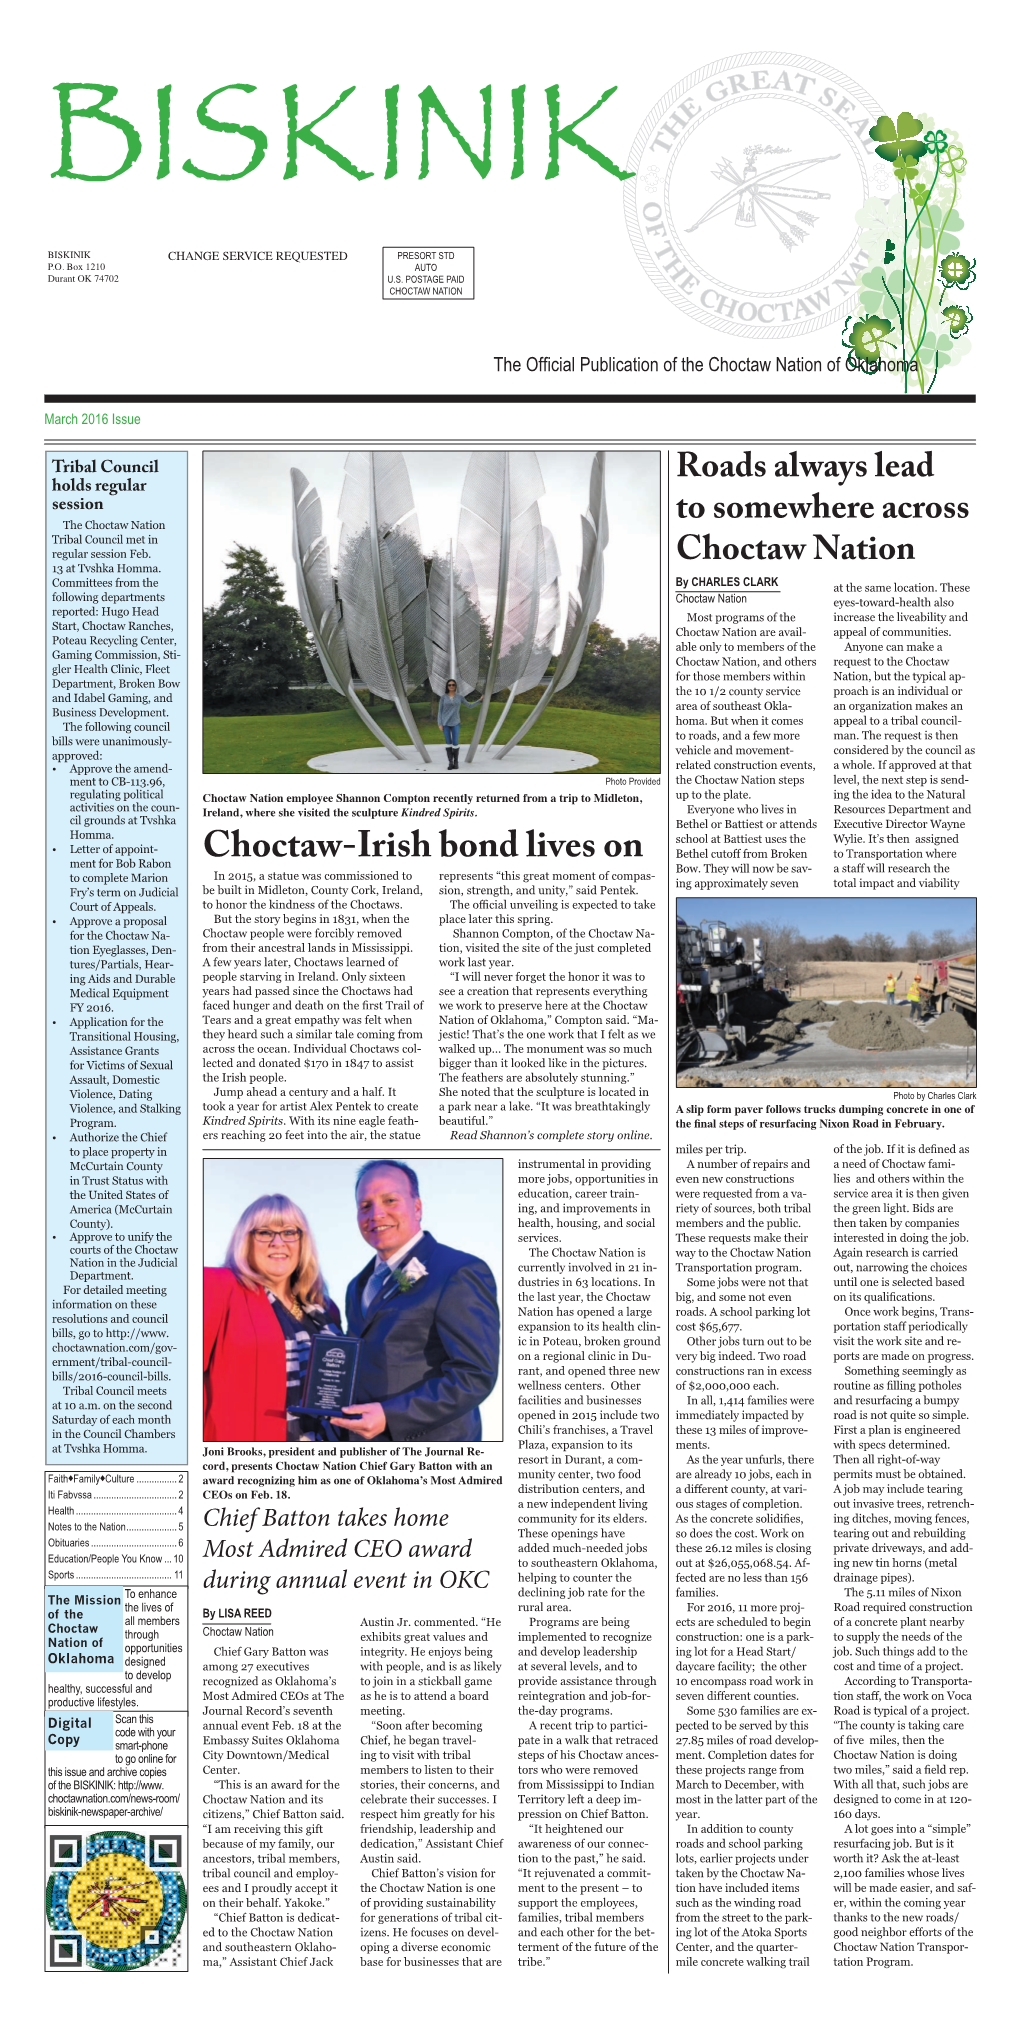 Choctaw-Irish Bond Lives On